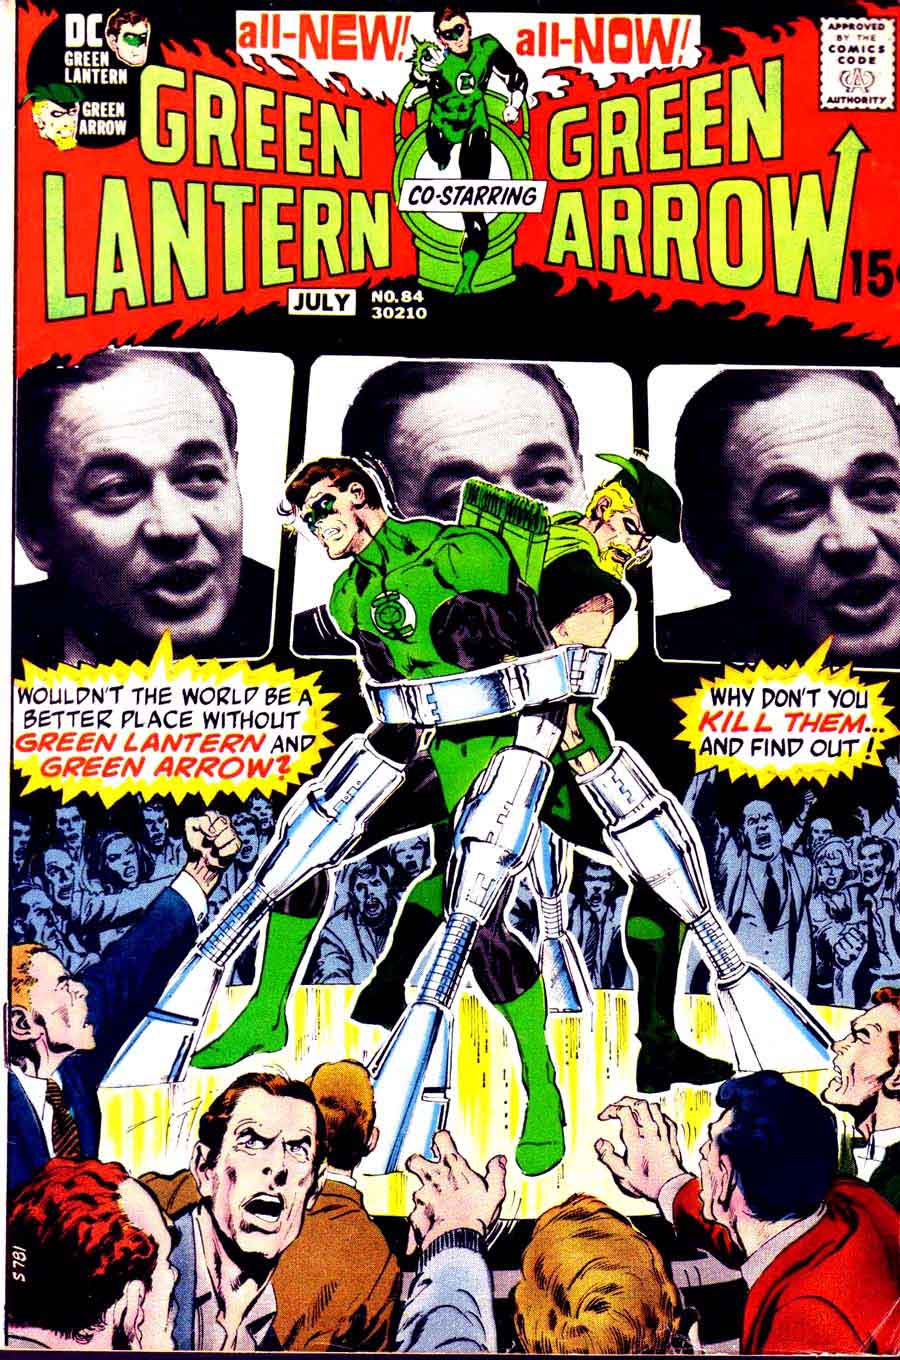 Green Lantern Green Arrow #84 bronze age 1970s dc comic book cover art by Neal Adams